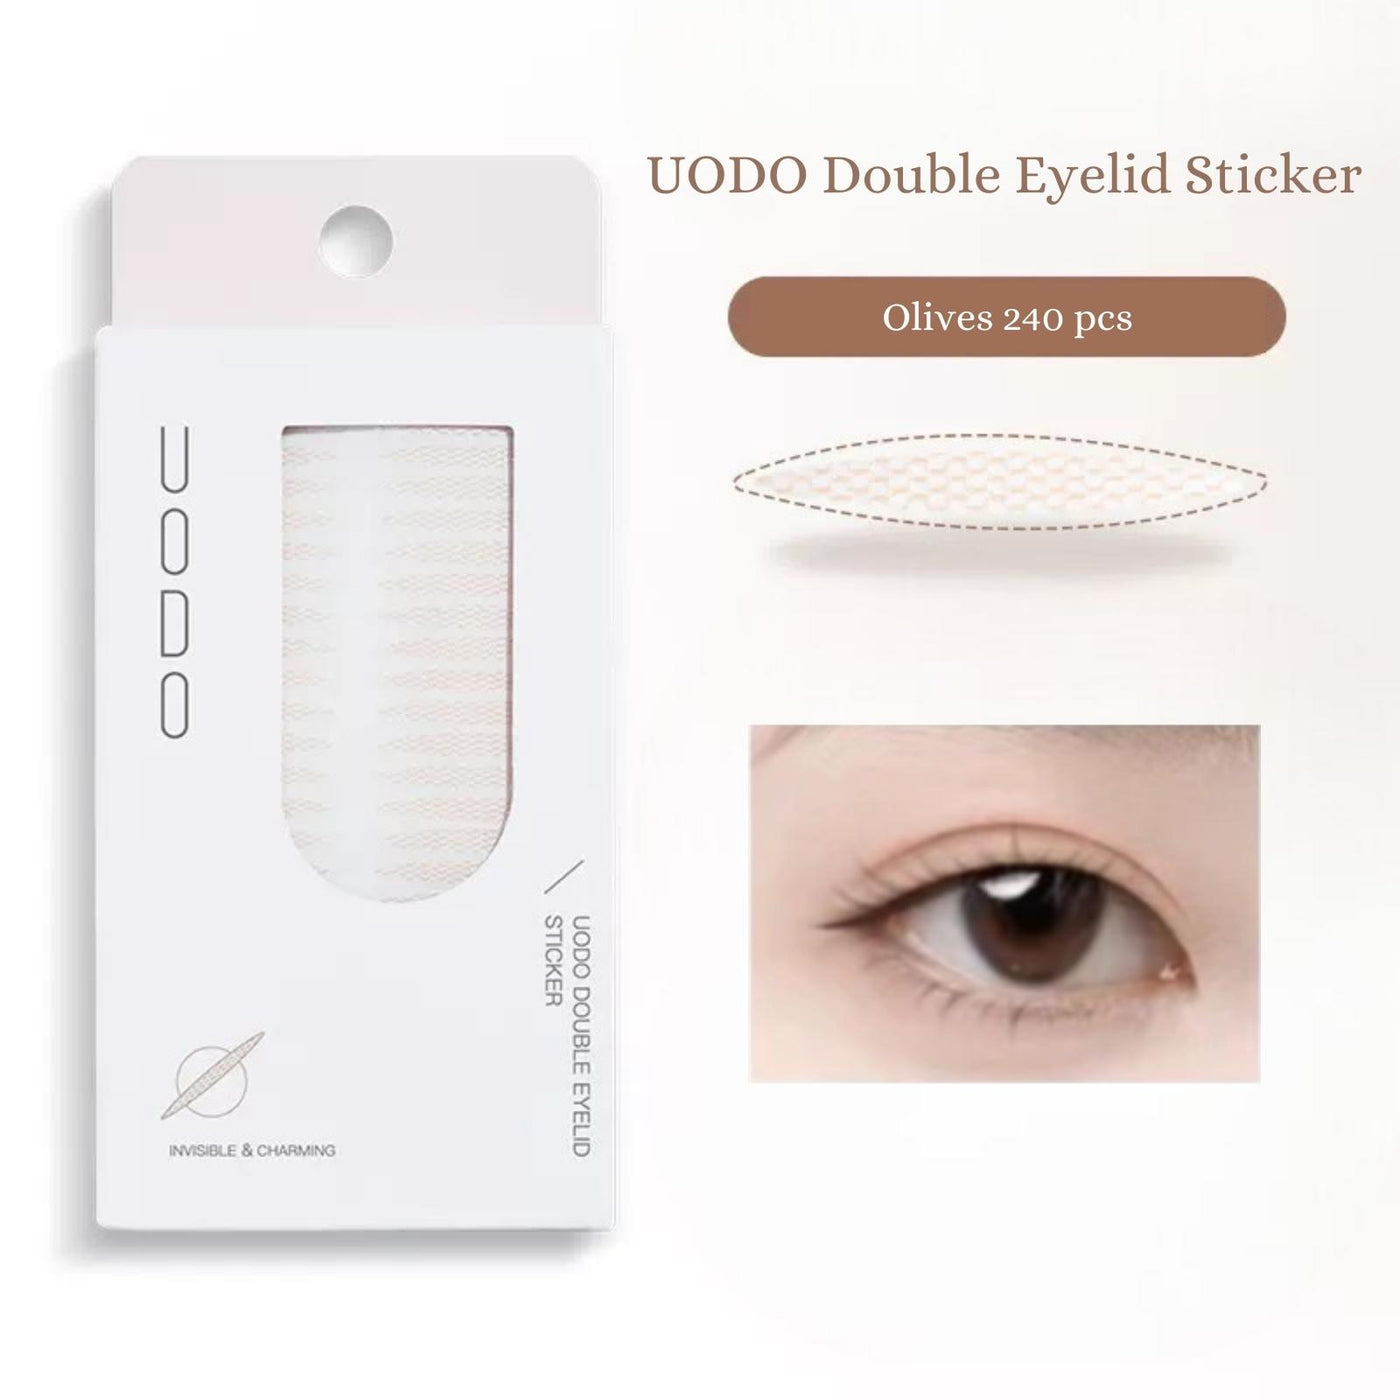 UODO Double Eyelid Sticker